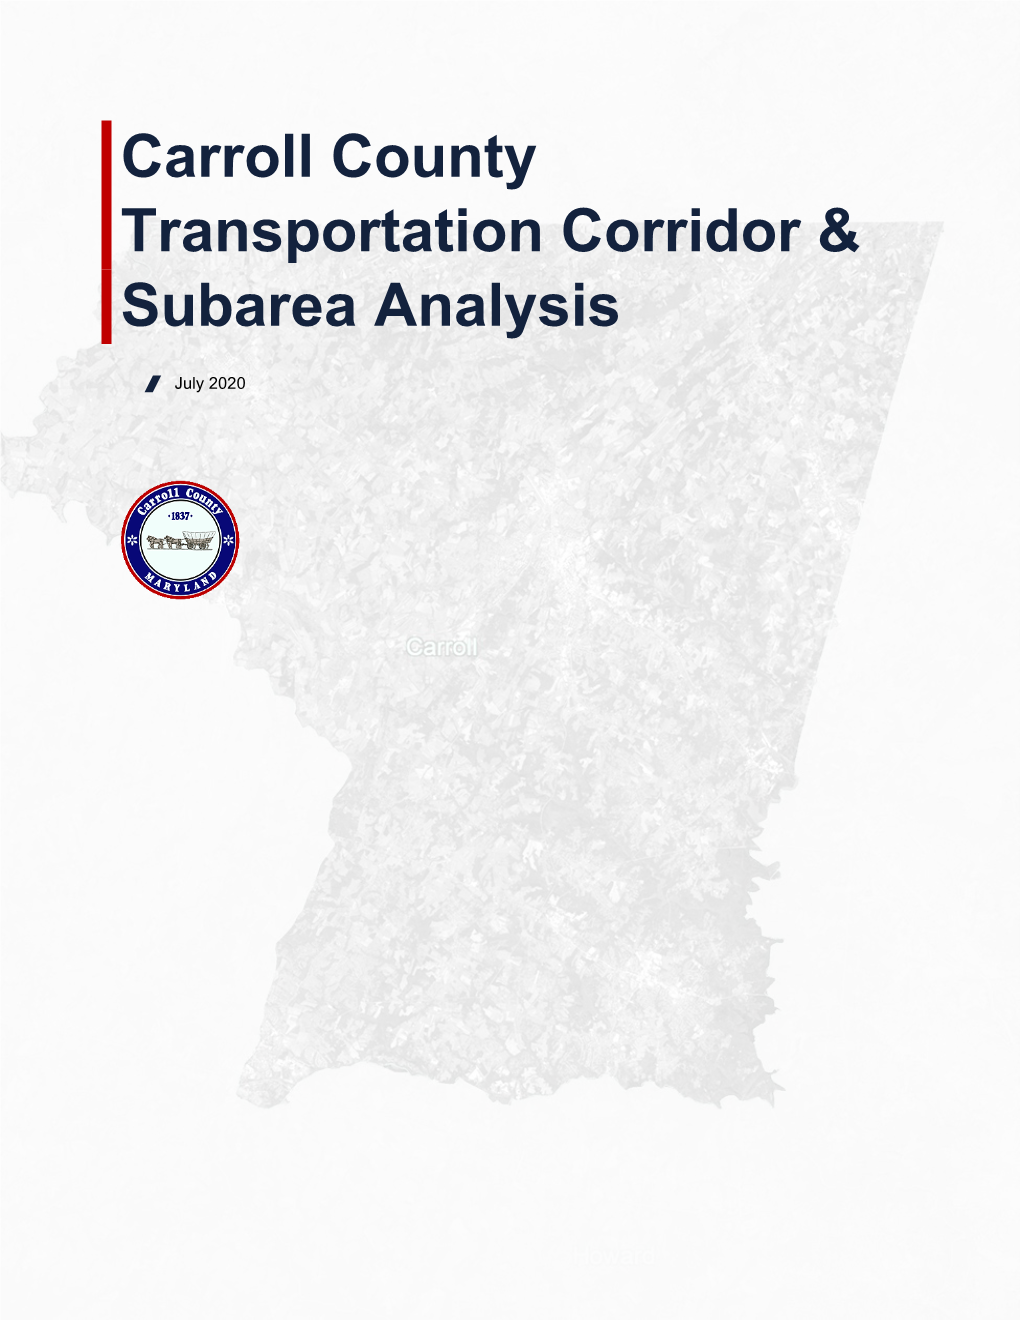 Carroll County Transportation Corridor & Subarea Analysis